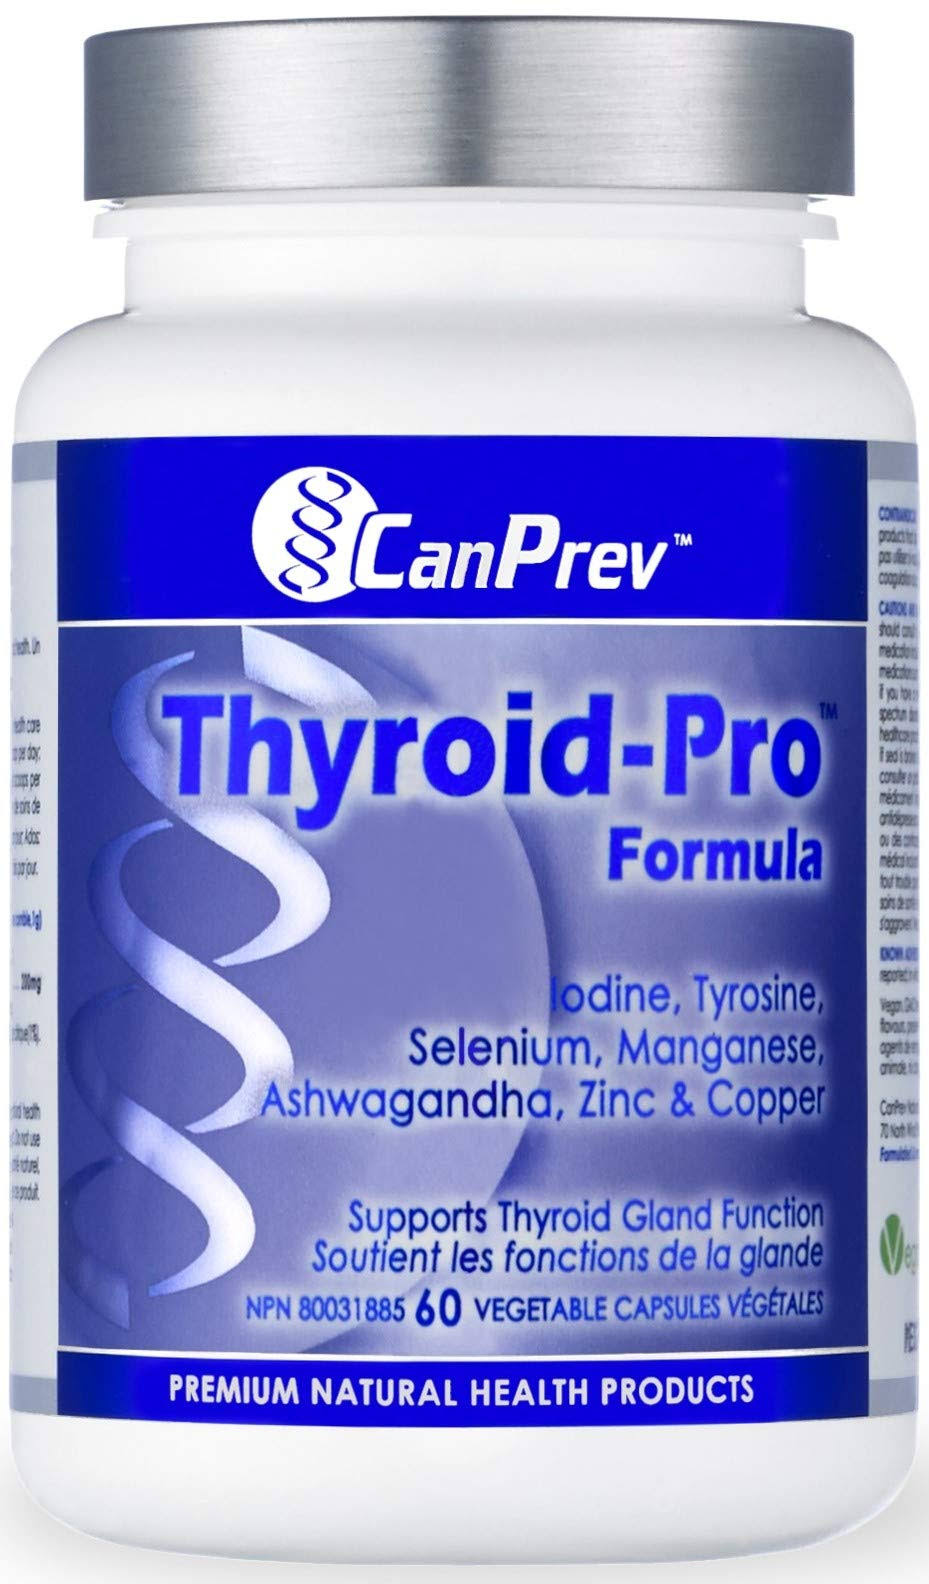 CanPrev Thyroid-Pro Formula Vegi Capsules, 60 Count